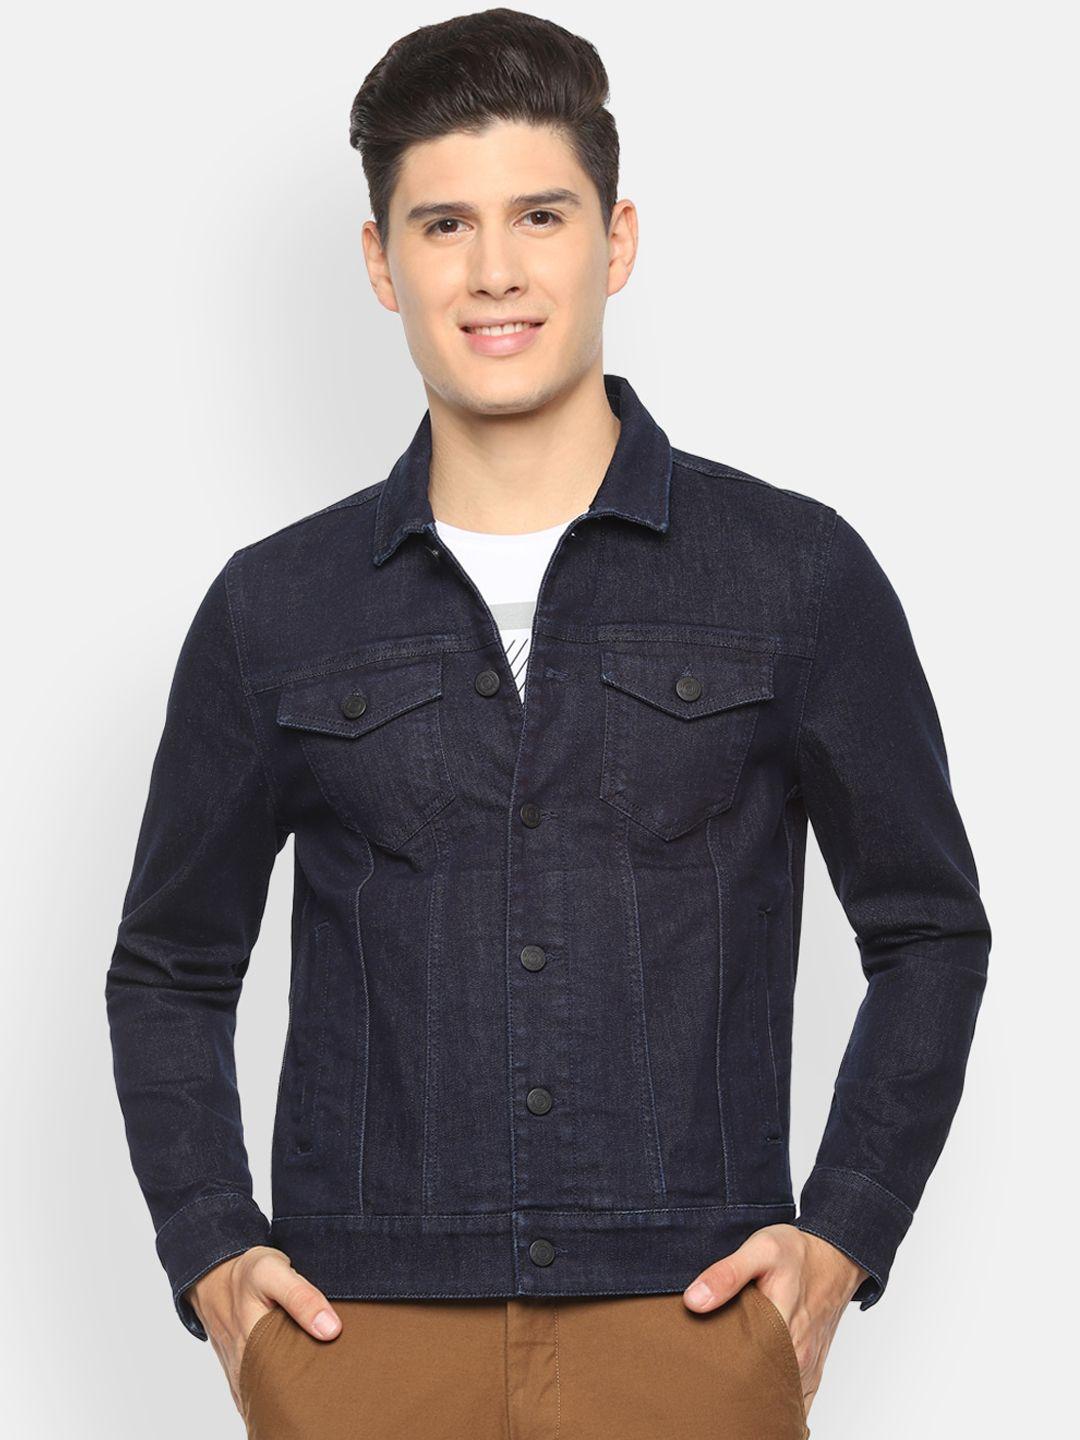 louis philippe jeans men navy blue solid denim jacket